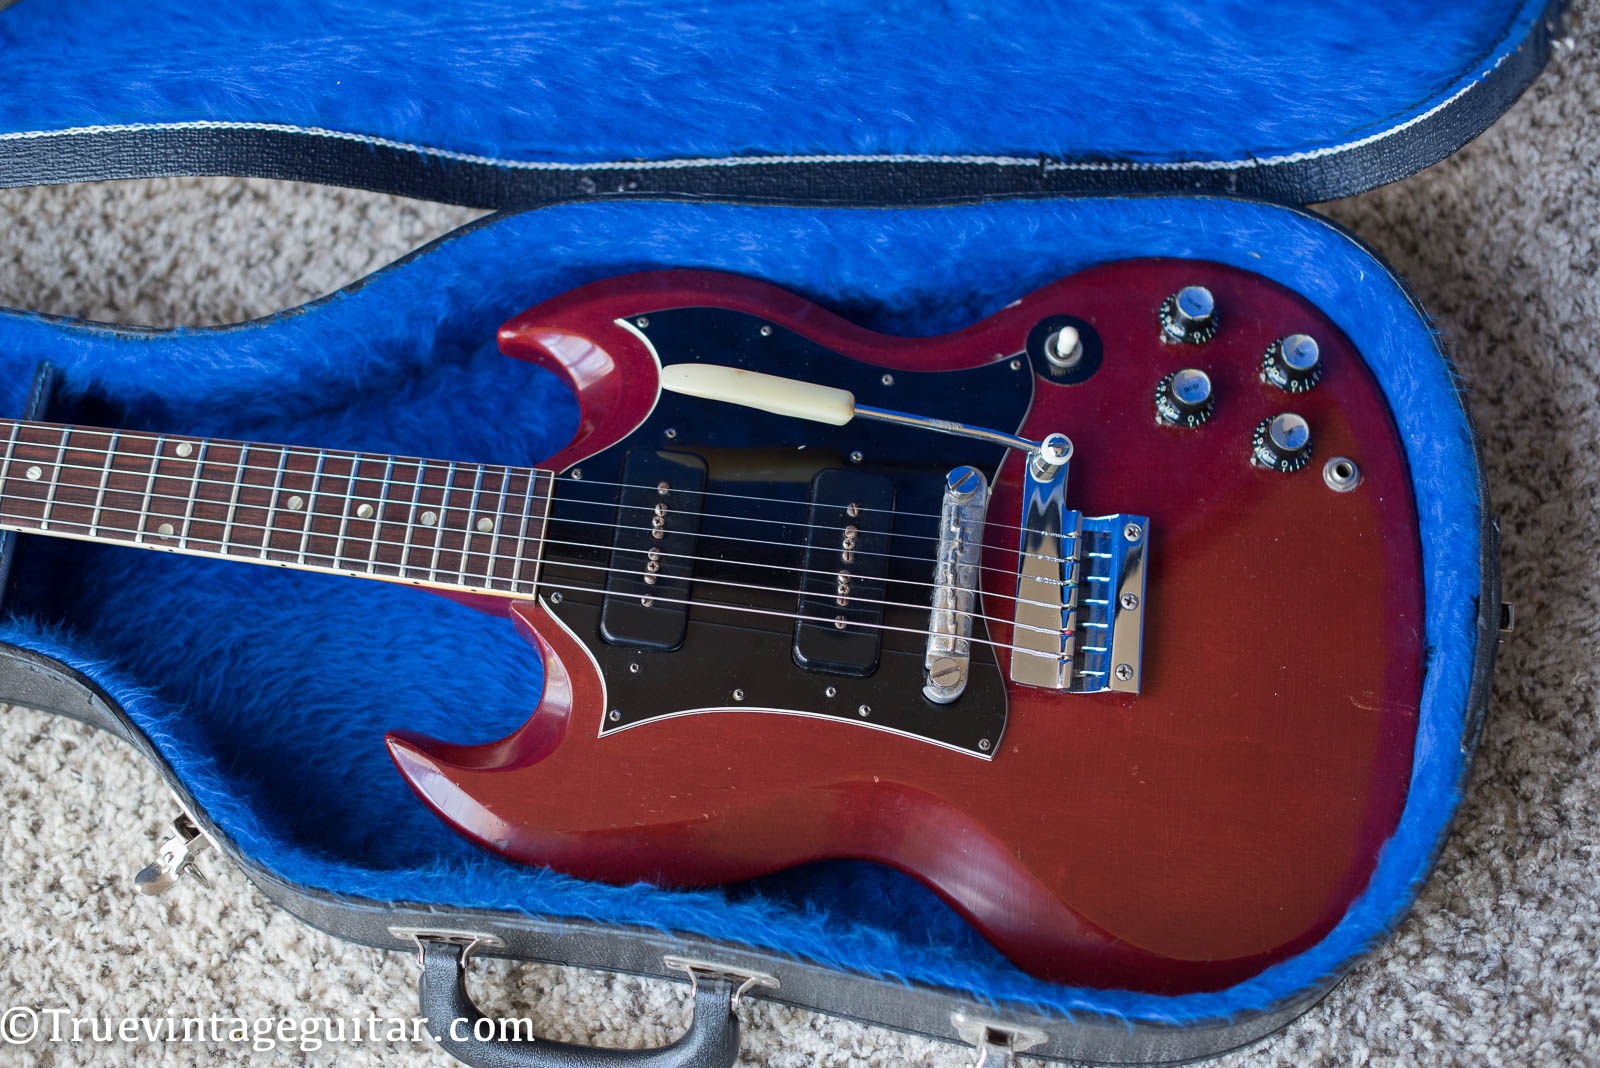 Gibson SG Special guitar, P-90 pickups, wrap tail bridge